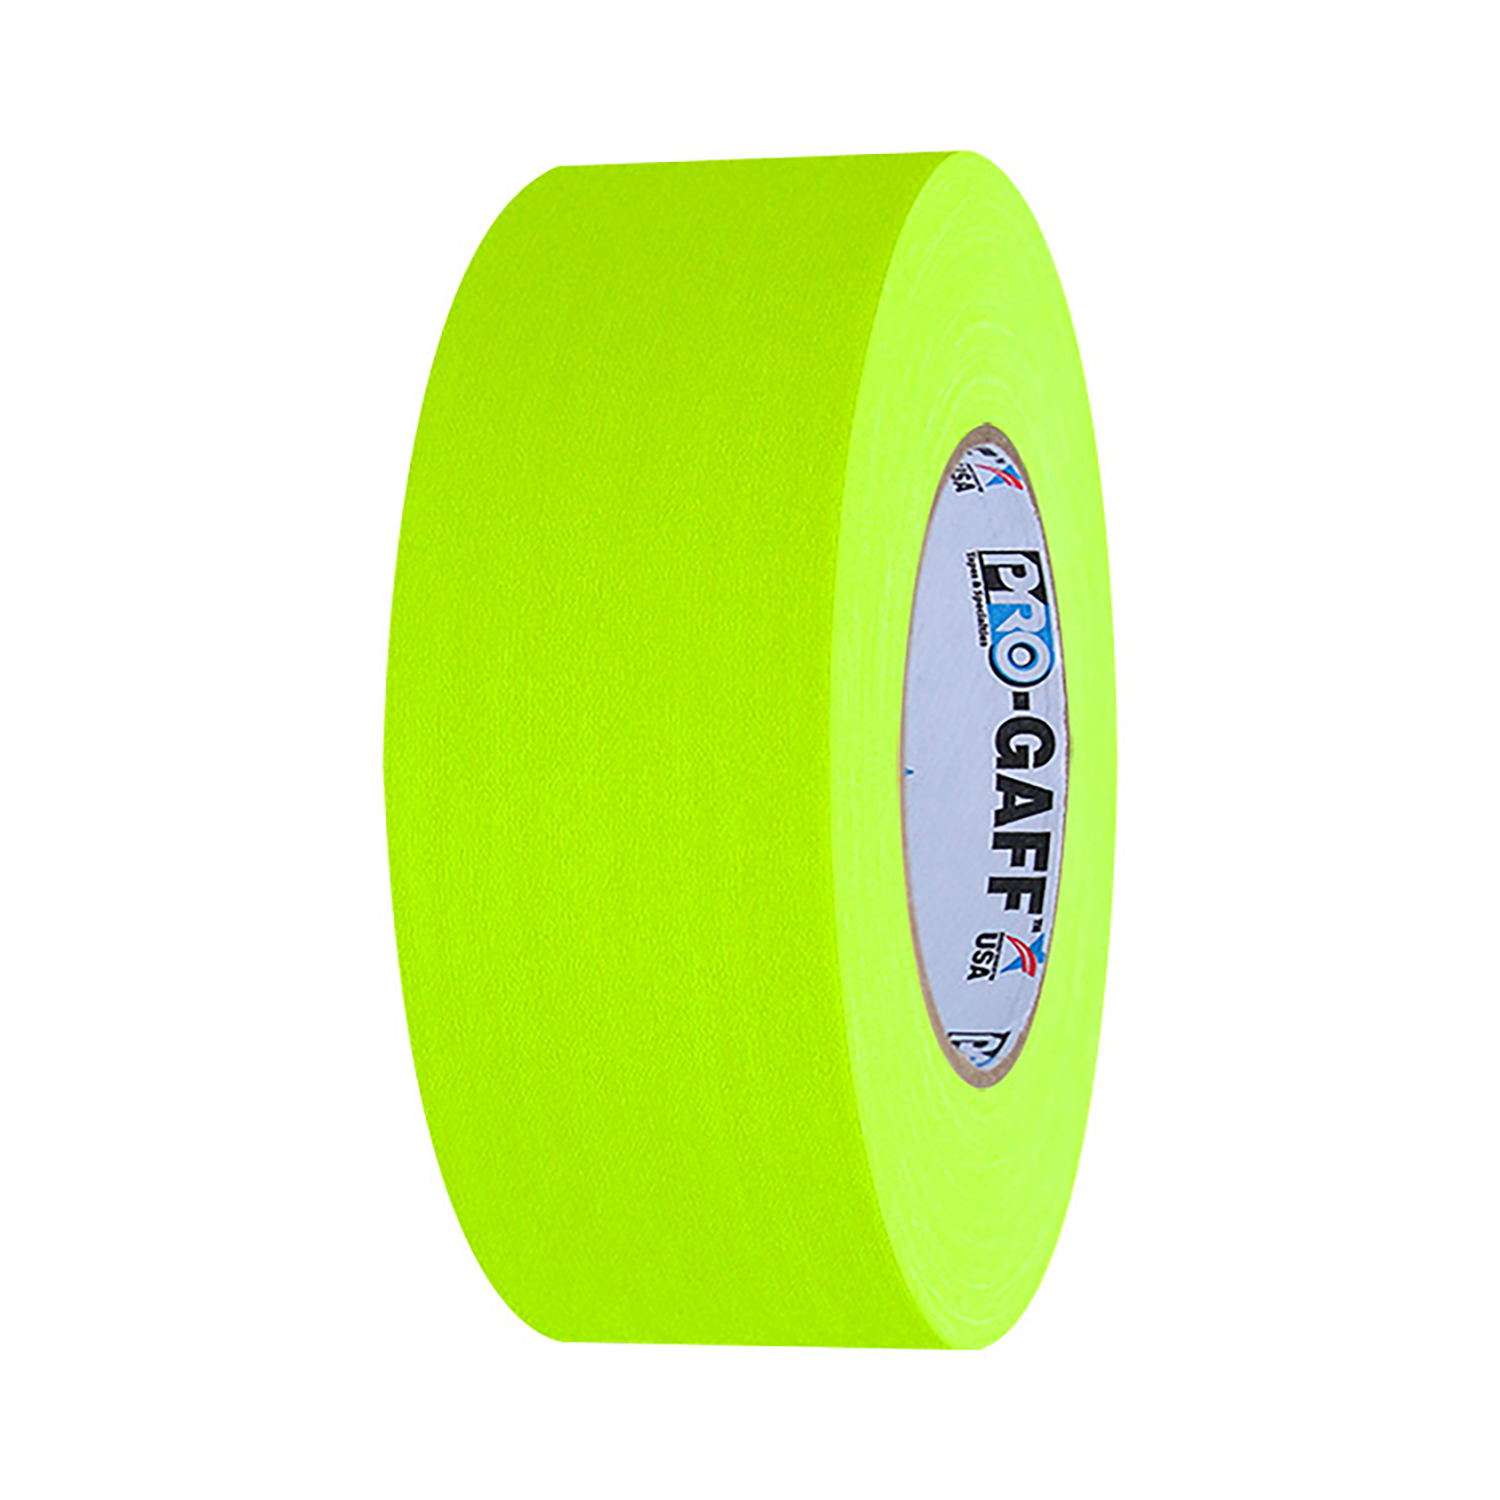 Pro Gaff Tape Cloth - Fluorescent Yellow - 50 Yards - 1"